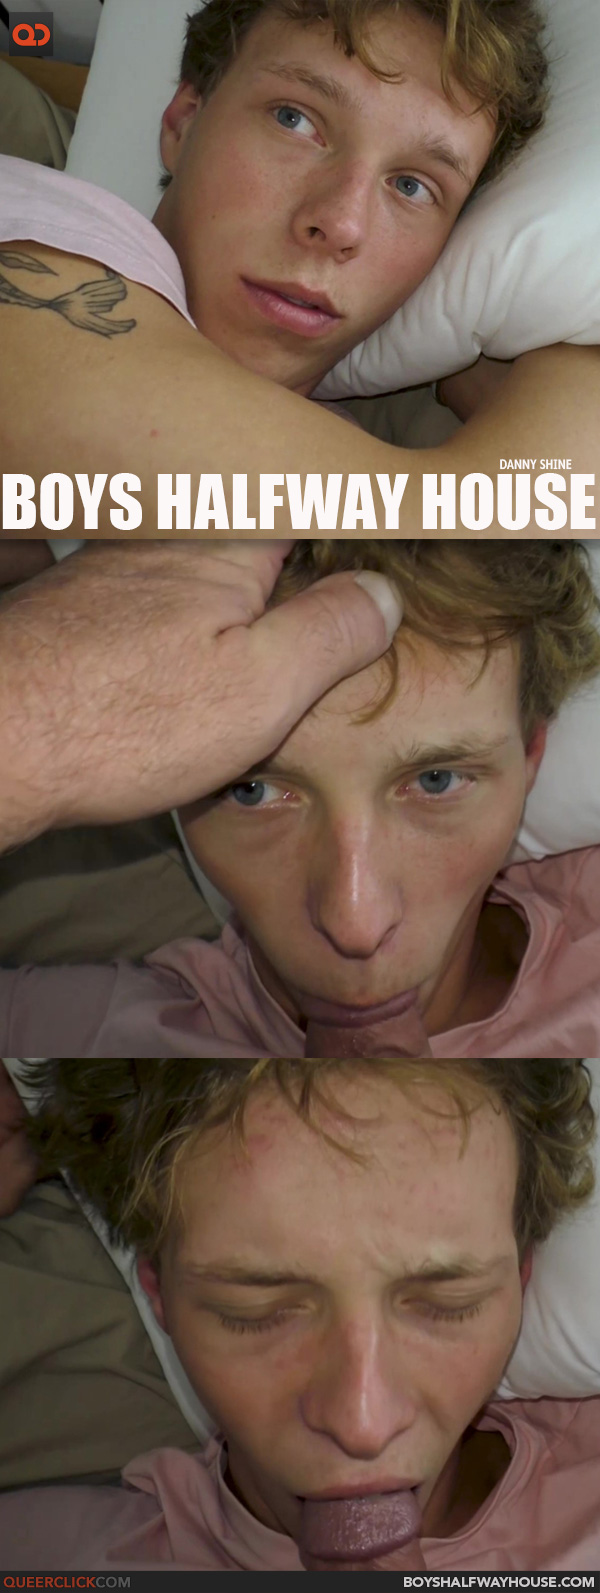 Boys Halfway House: Danny Shine